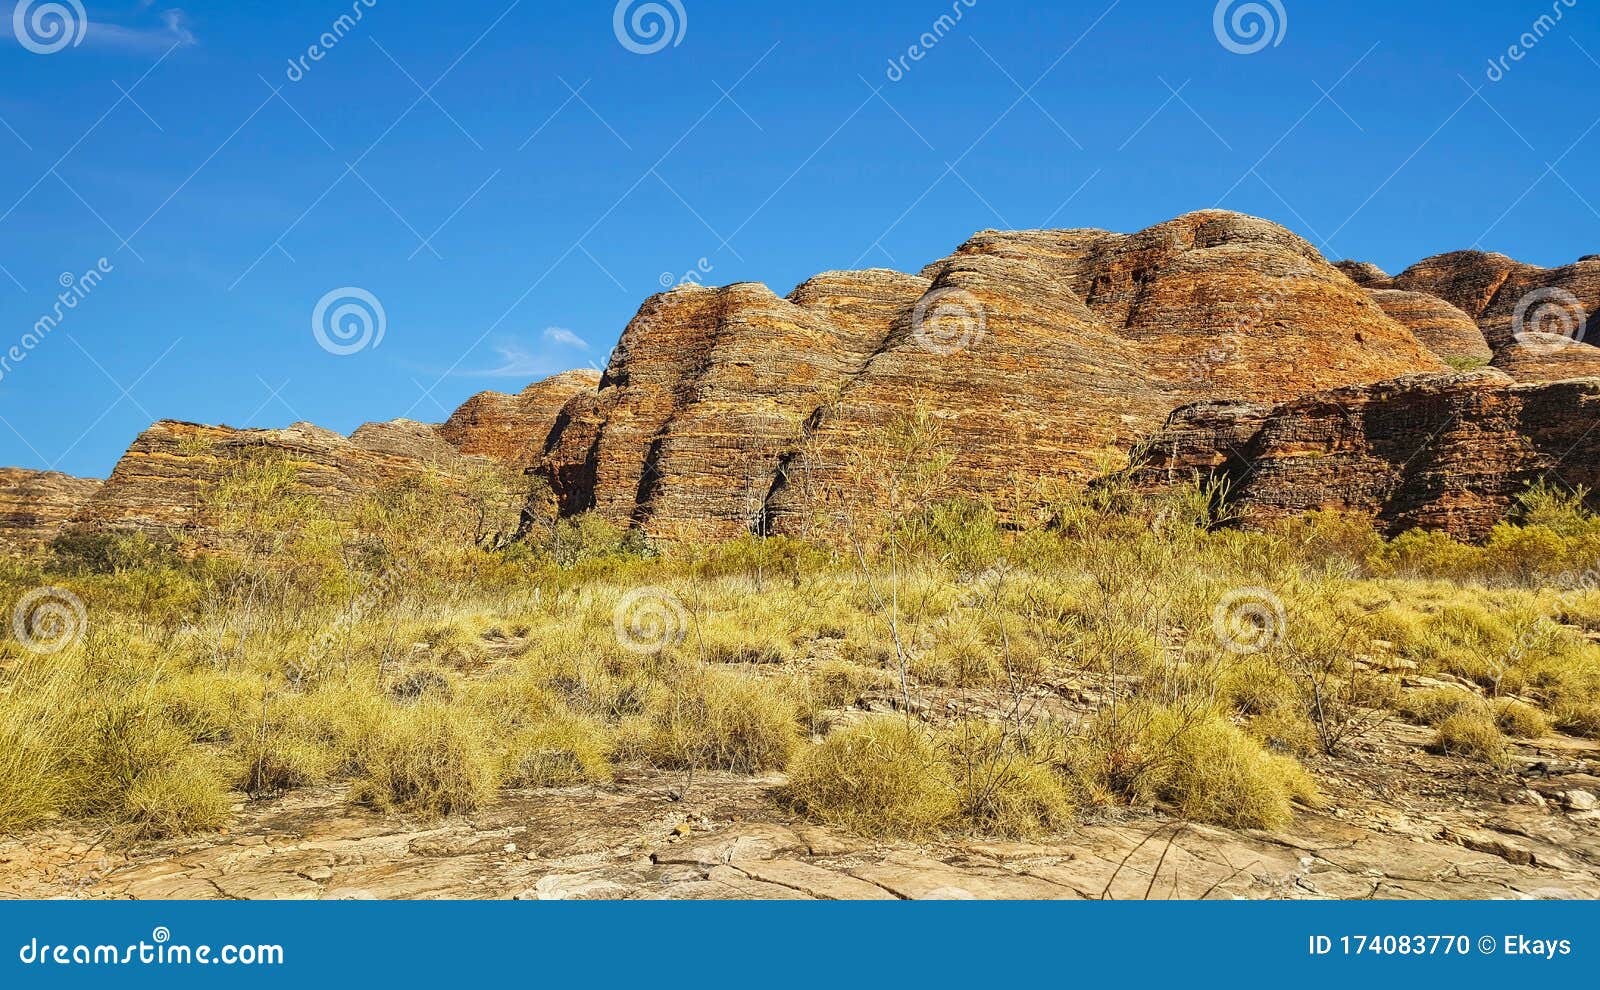 East Kimberley Region Of Western Australia Stock Photo Image Of Sandstone Rocks